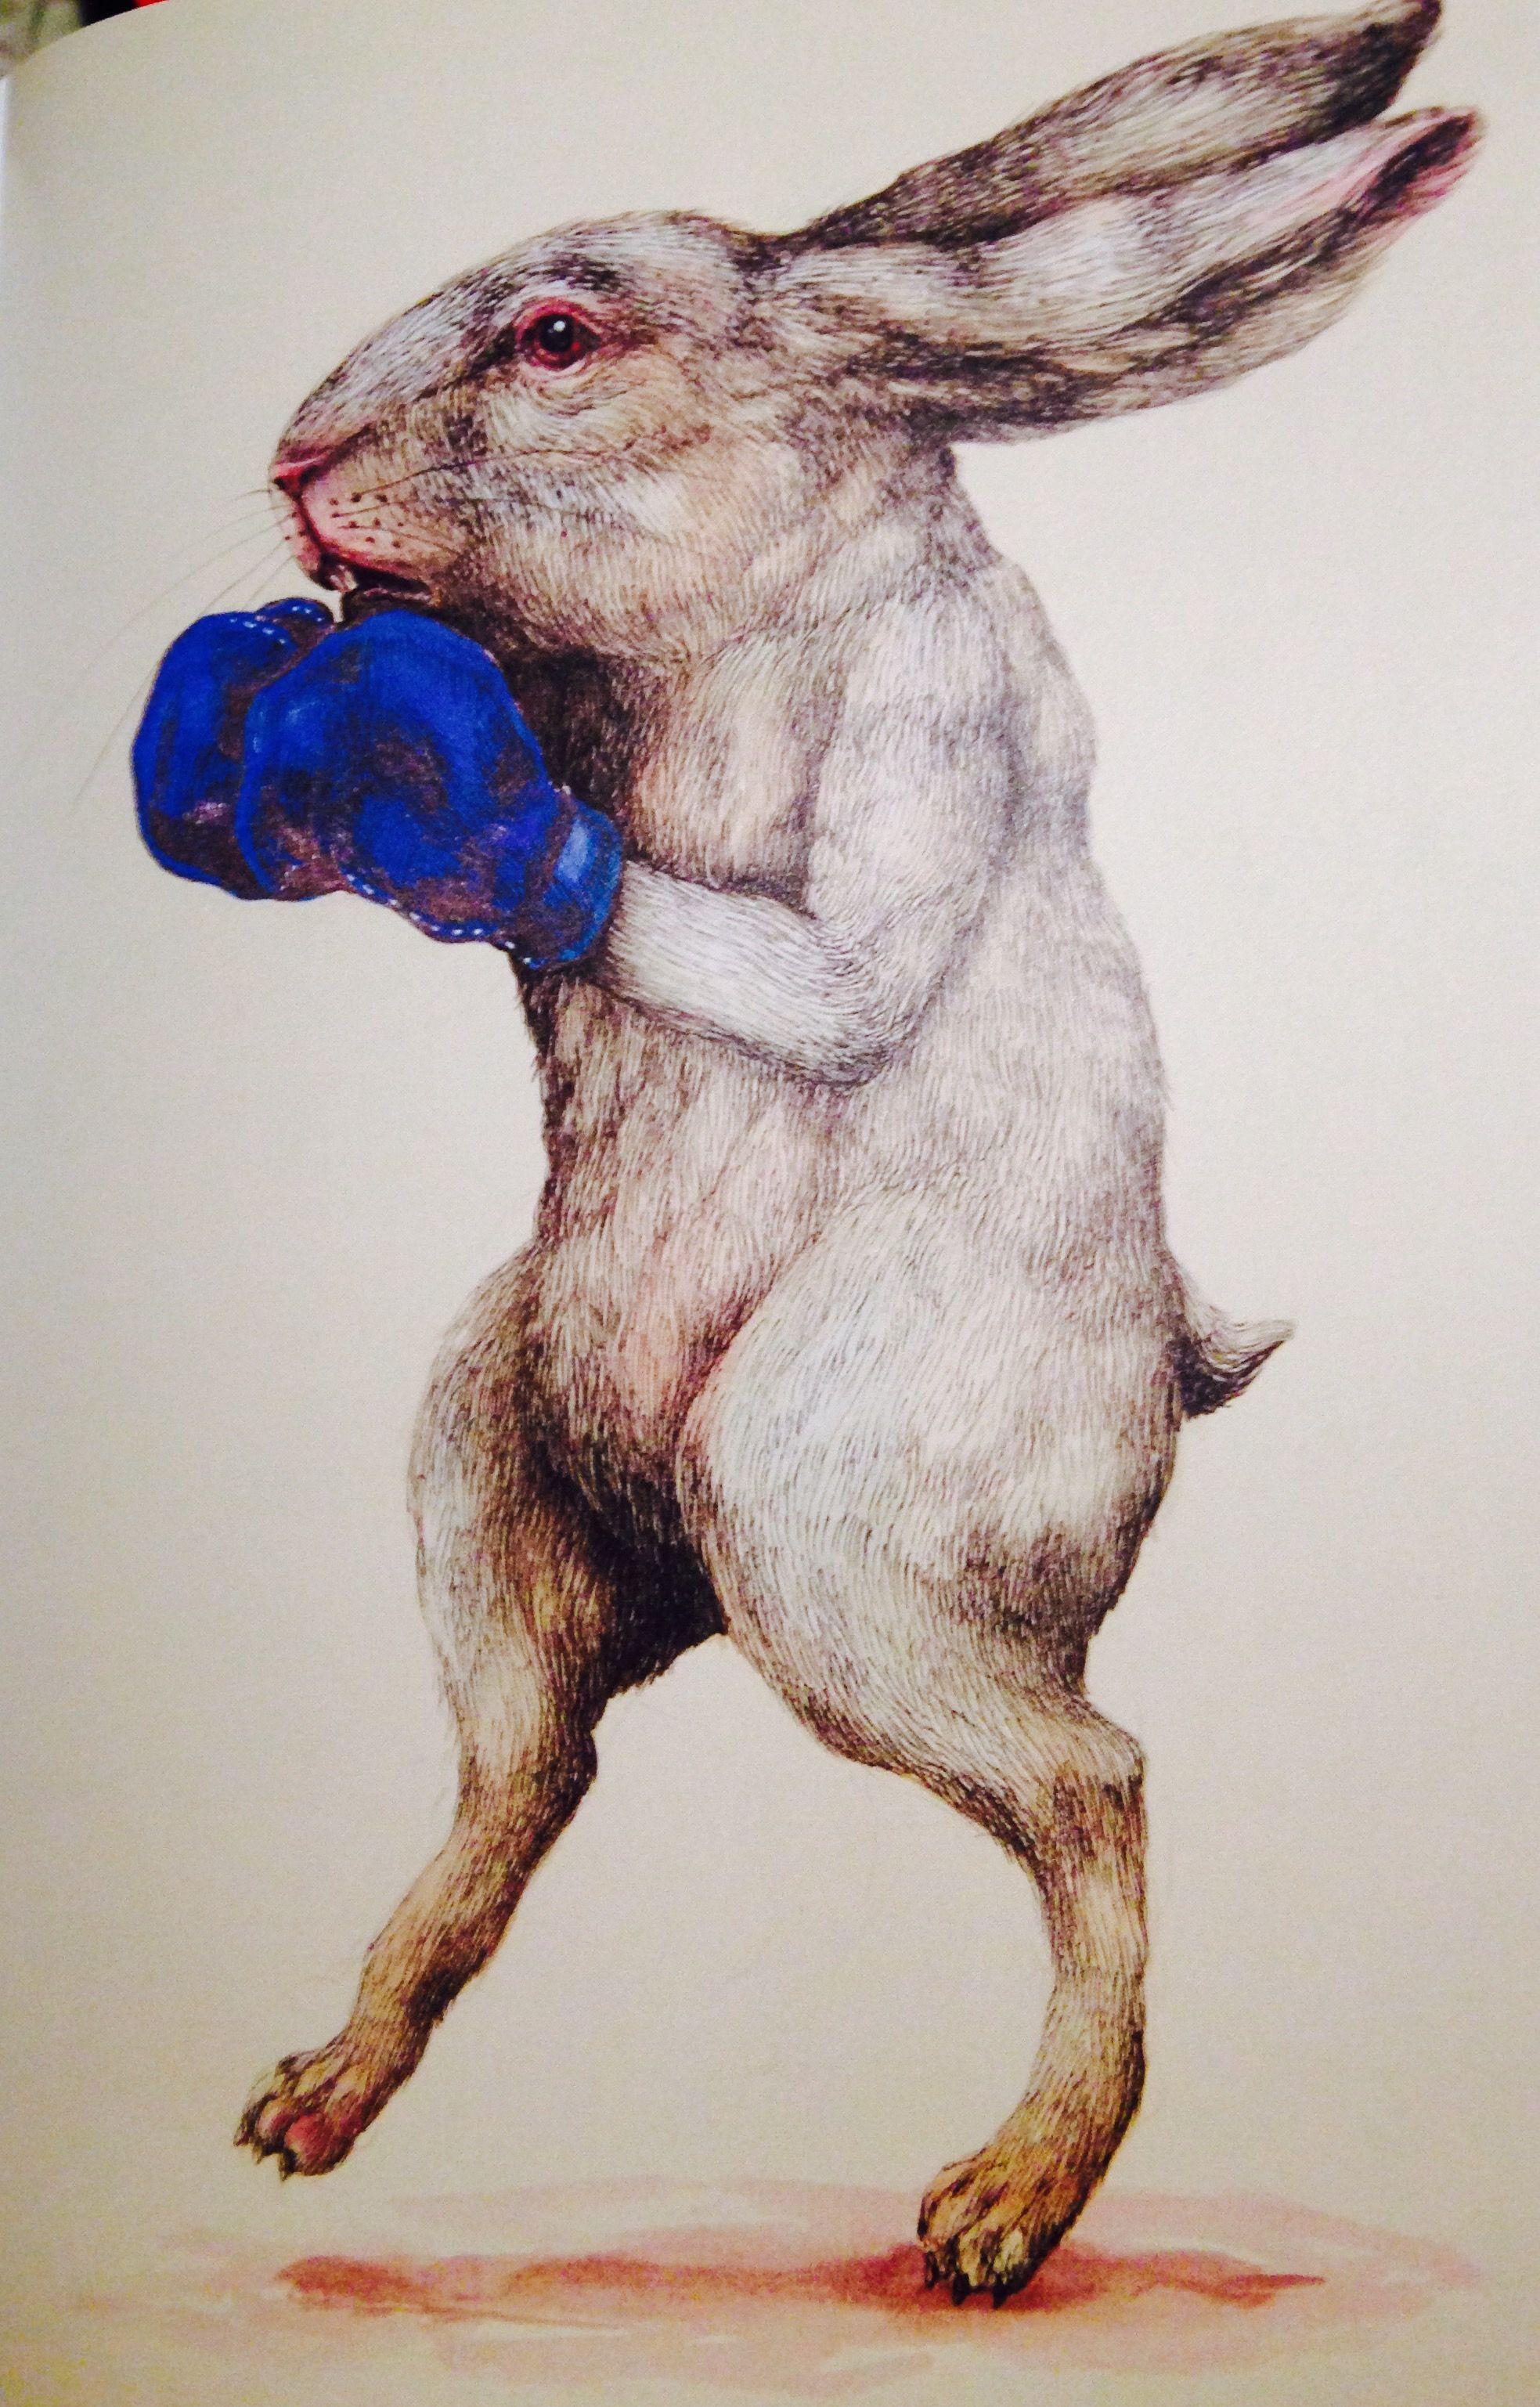 Rabbit Boxing Logo - Rabbit with Boxing Gloves. Illustration by Ericailcane. | Rabbits ...